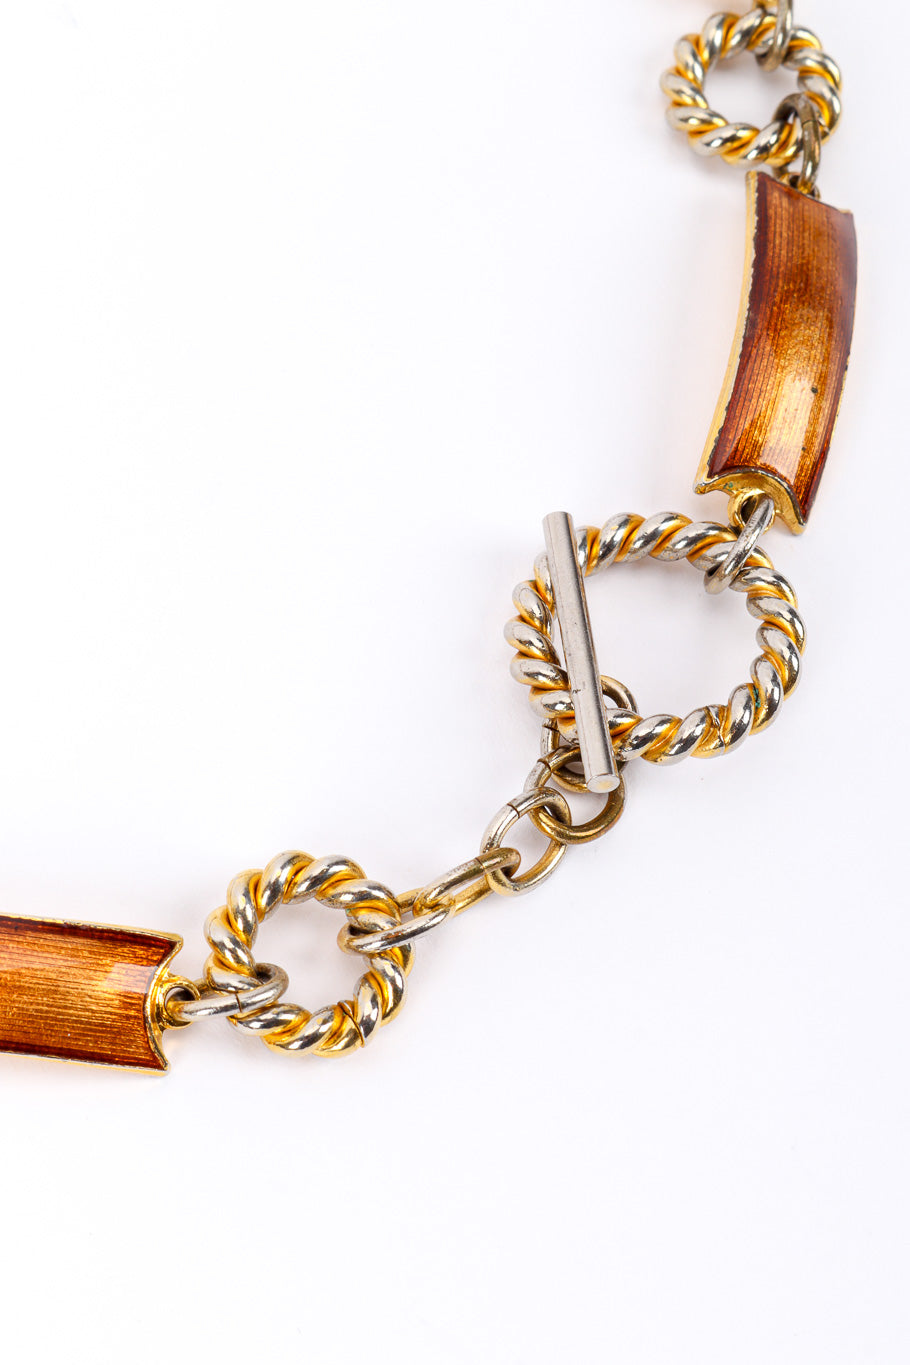 Vintage Gucci Enamel Chain Belt II toggle closure clasped @recessla